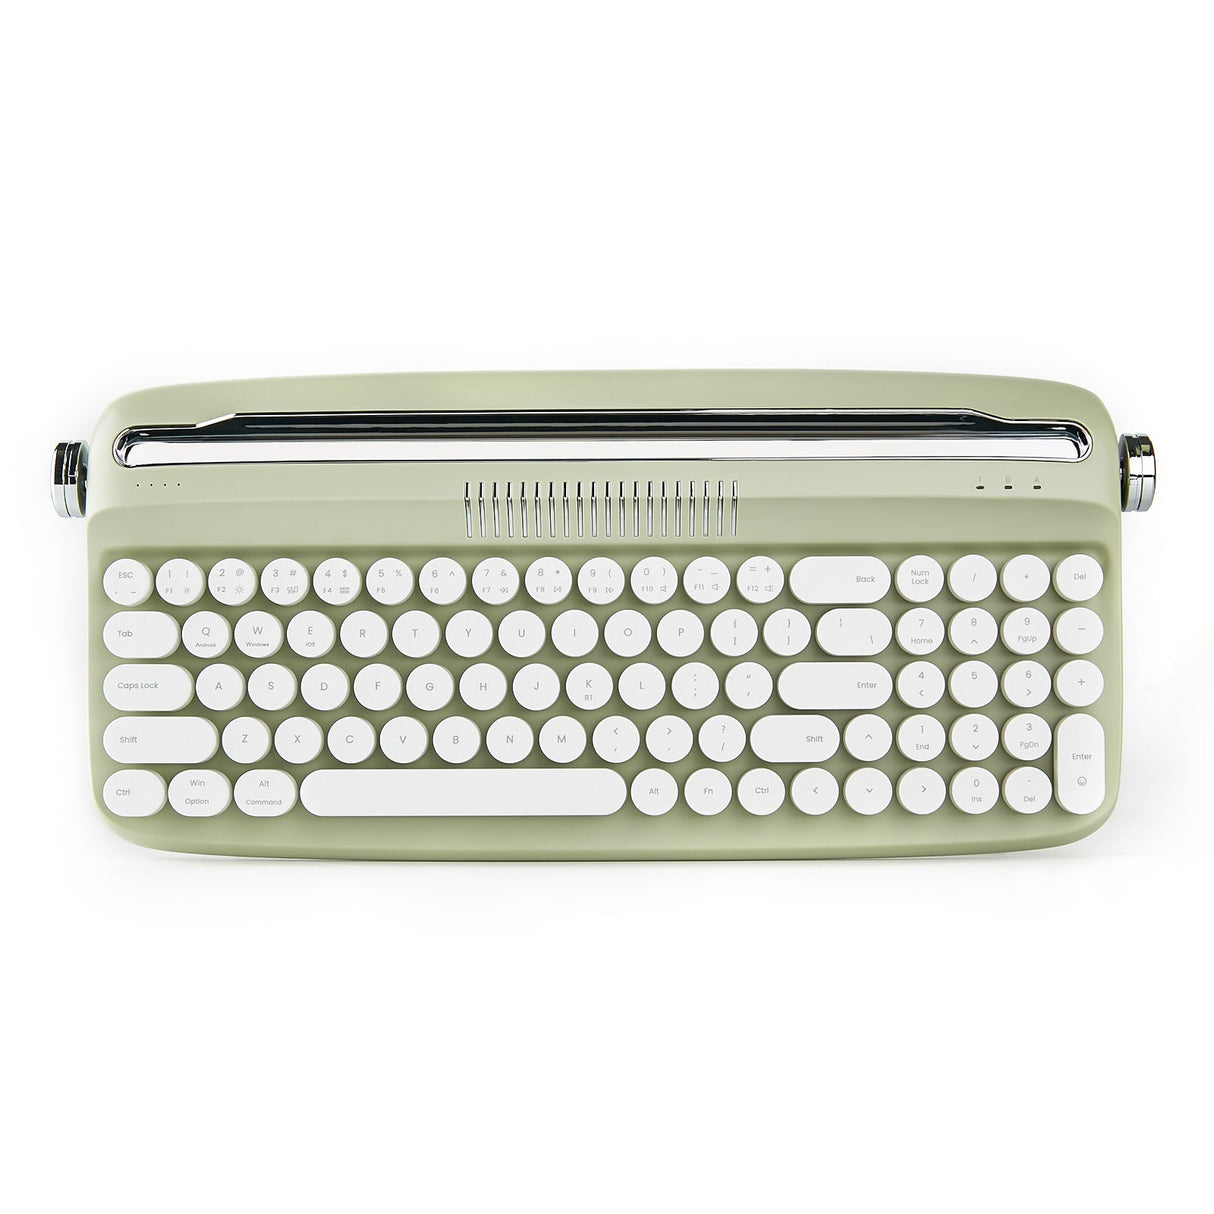 YUNZII ACTTO B309 Matcha Green Upgraded Rechargeable Wireless Retro Typewriter Keyboard